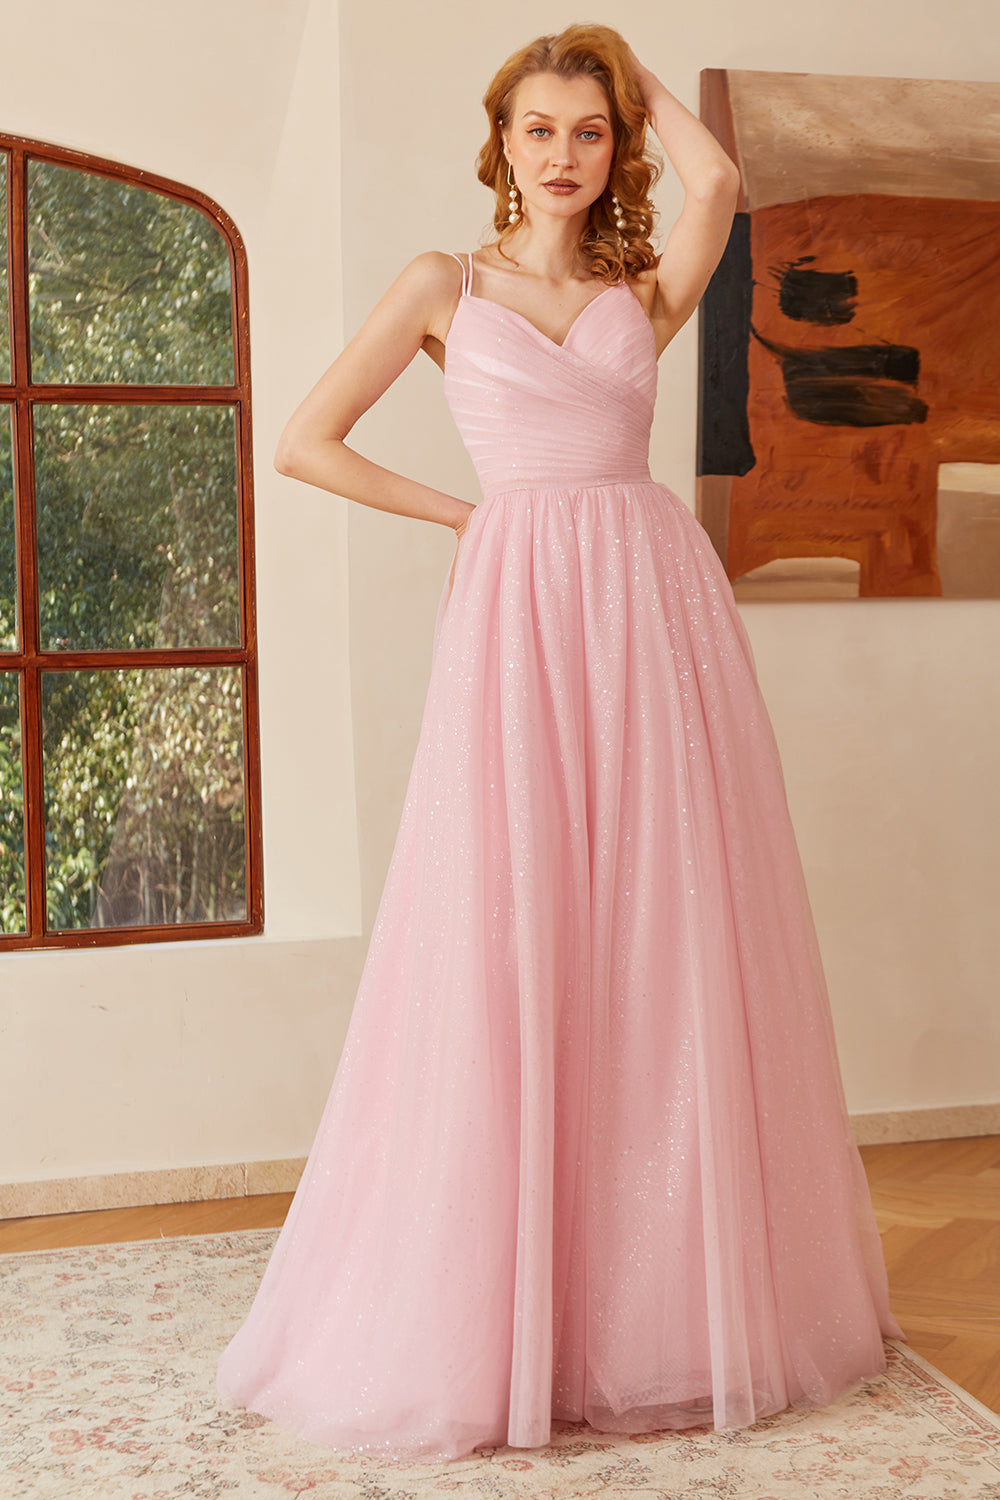 Glitter Pink Lace-Up Ruched Long Ball Dress